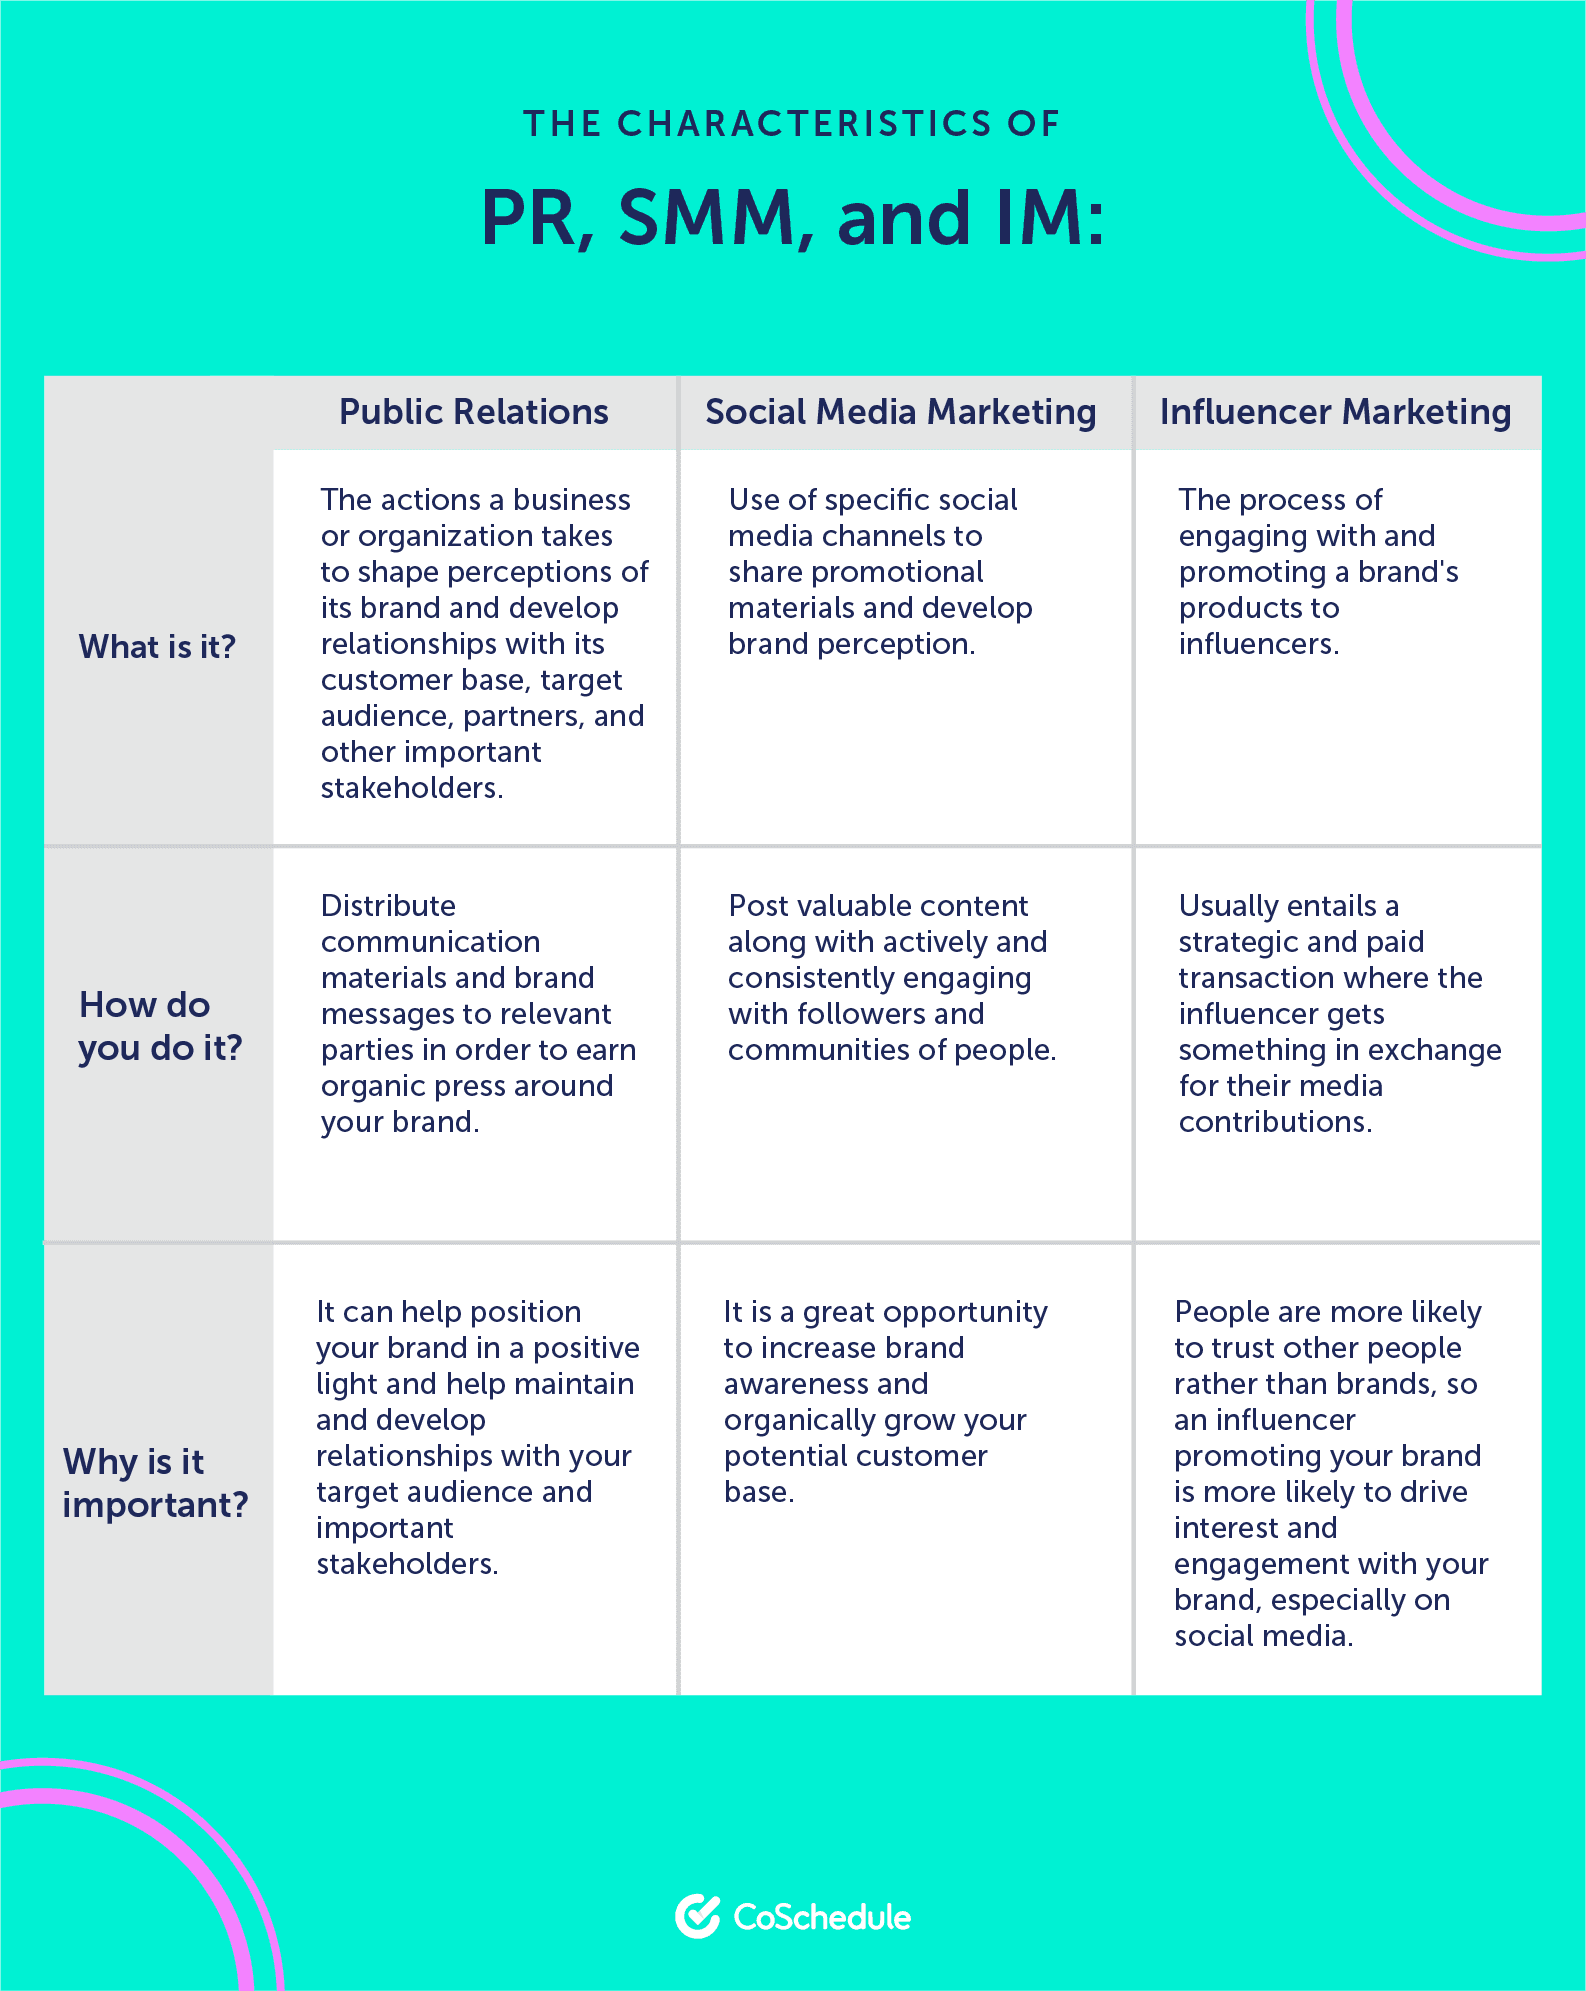 PR, SMM, & IM characteristics